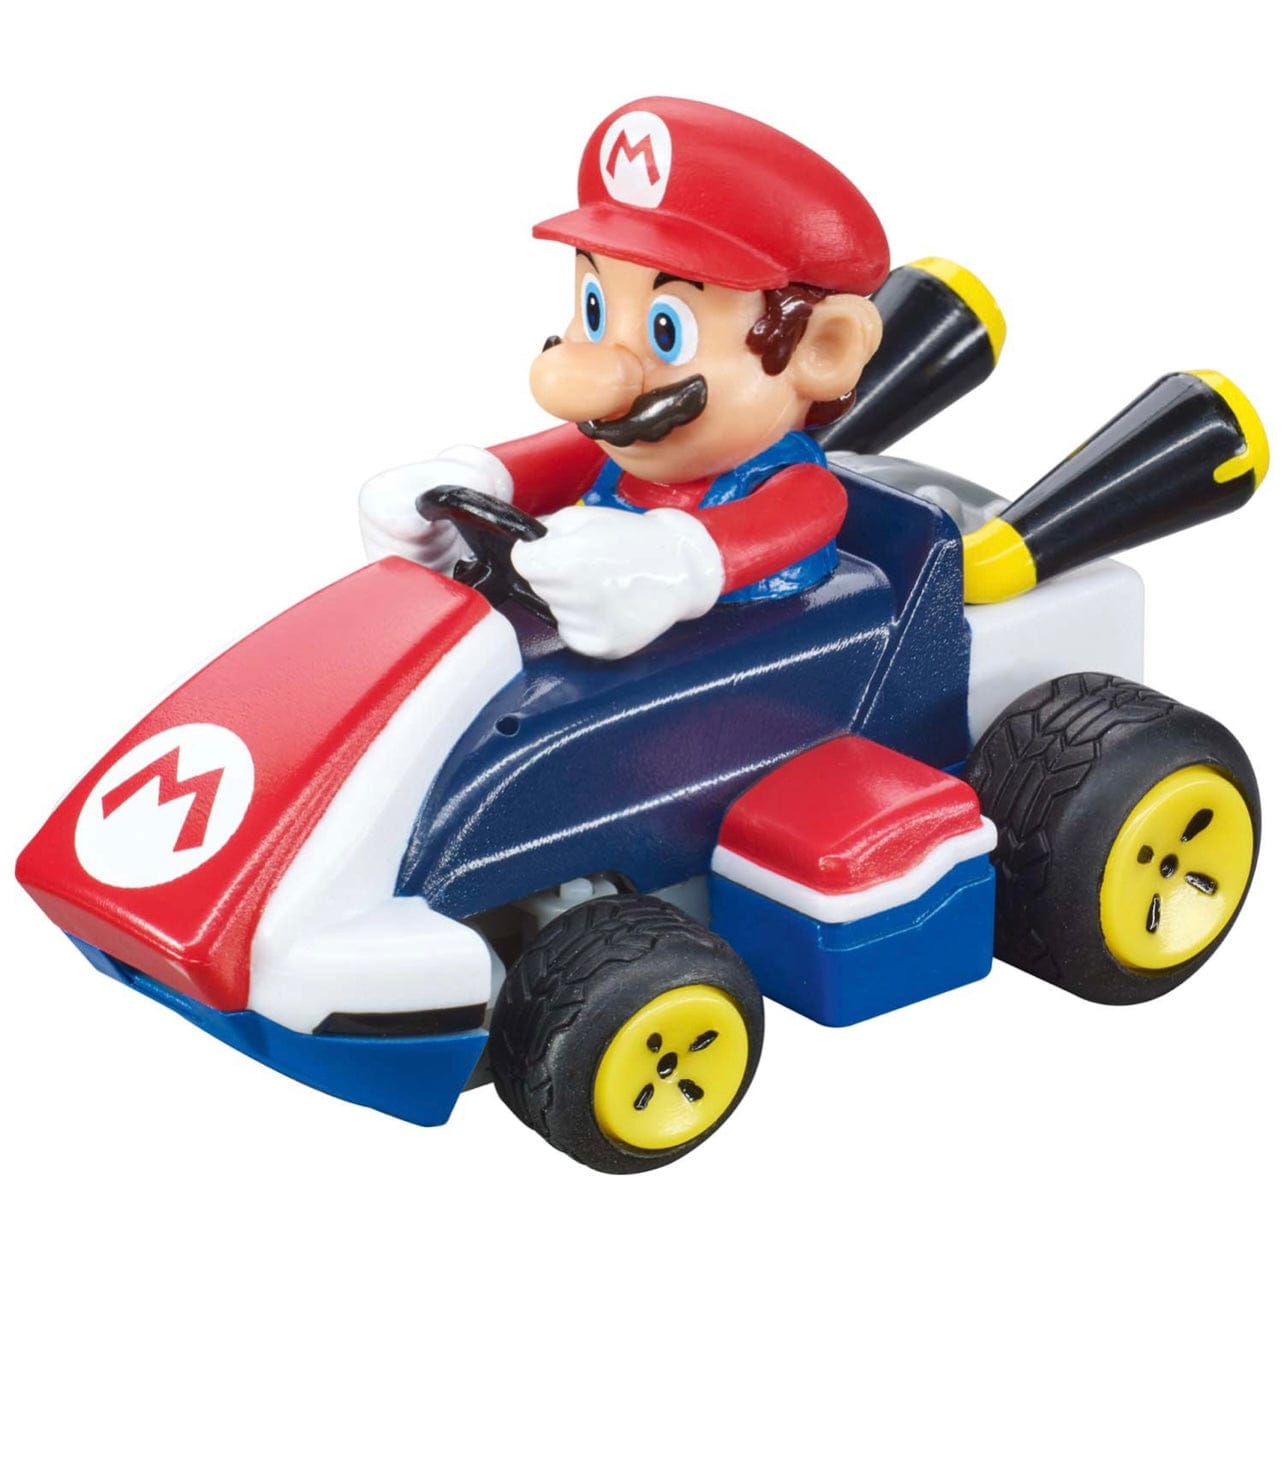 Official Nintendo Super Mario Toy 2.4GHz Mario Kart (TM) Mini RC - Mario